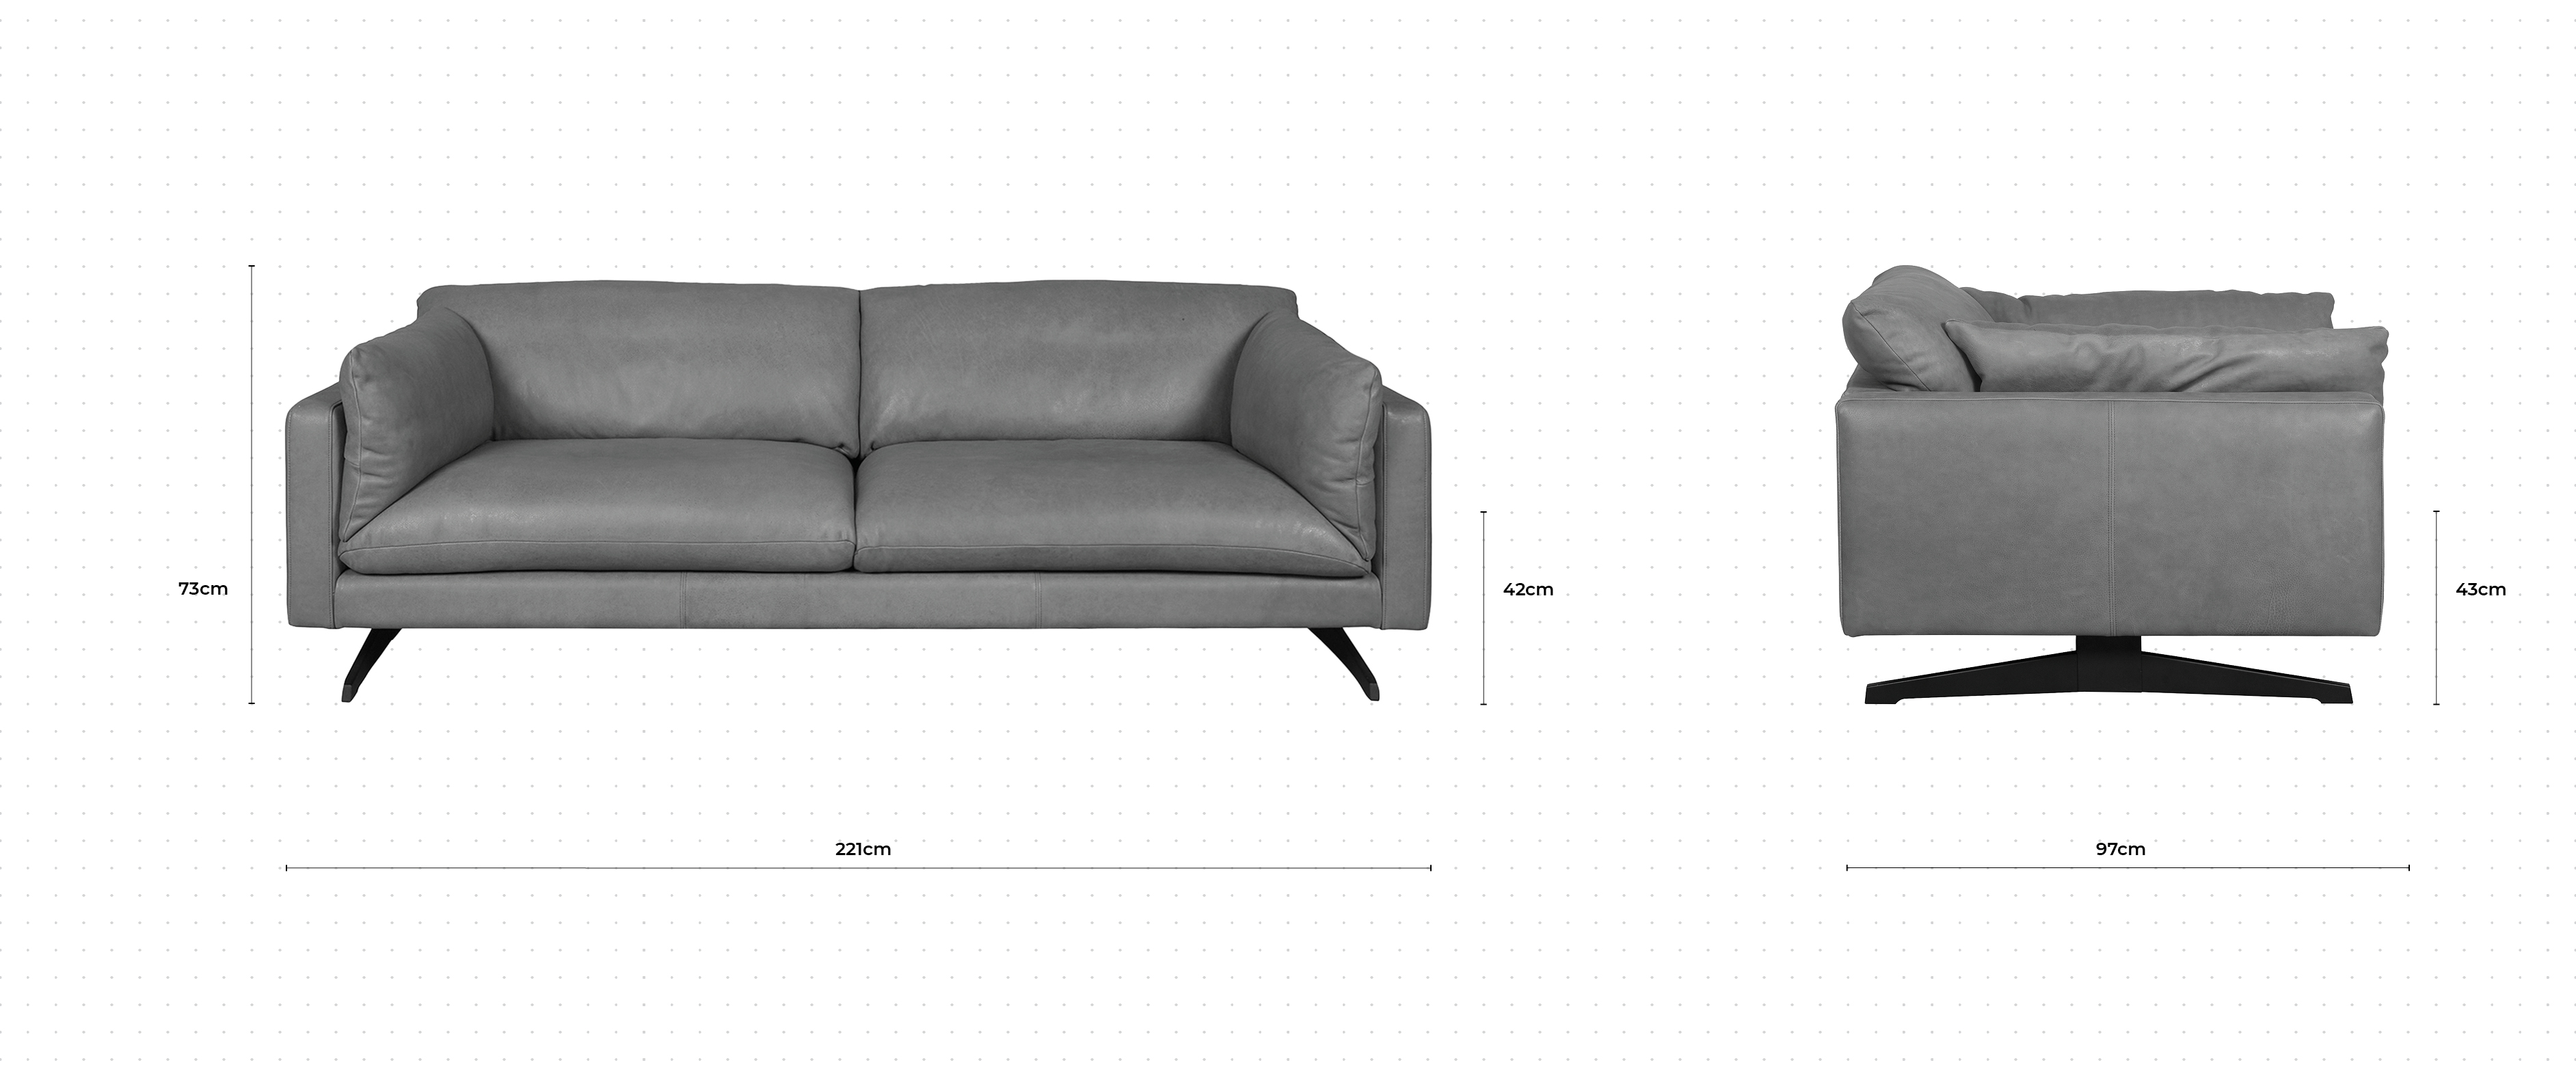 Eclair 2 Seater Sofa dimensions